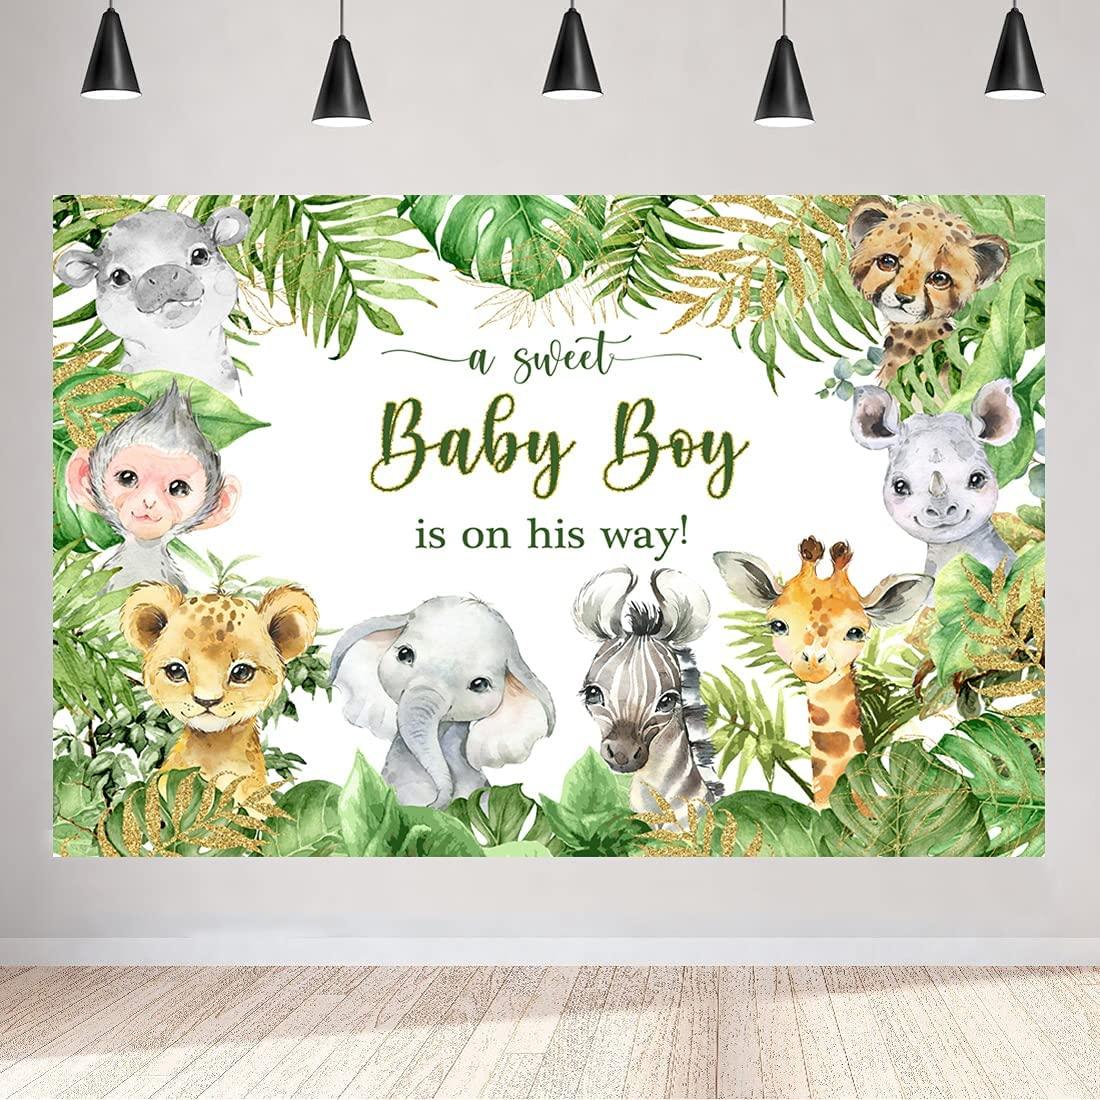 It's a boy baby shower stickers jungle safari animals bright colors